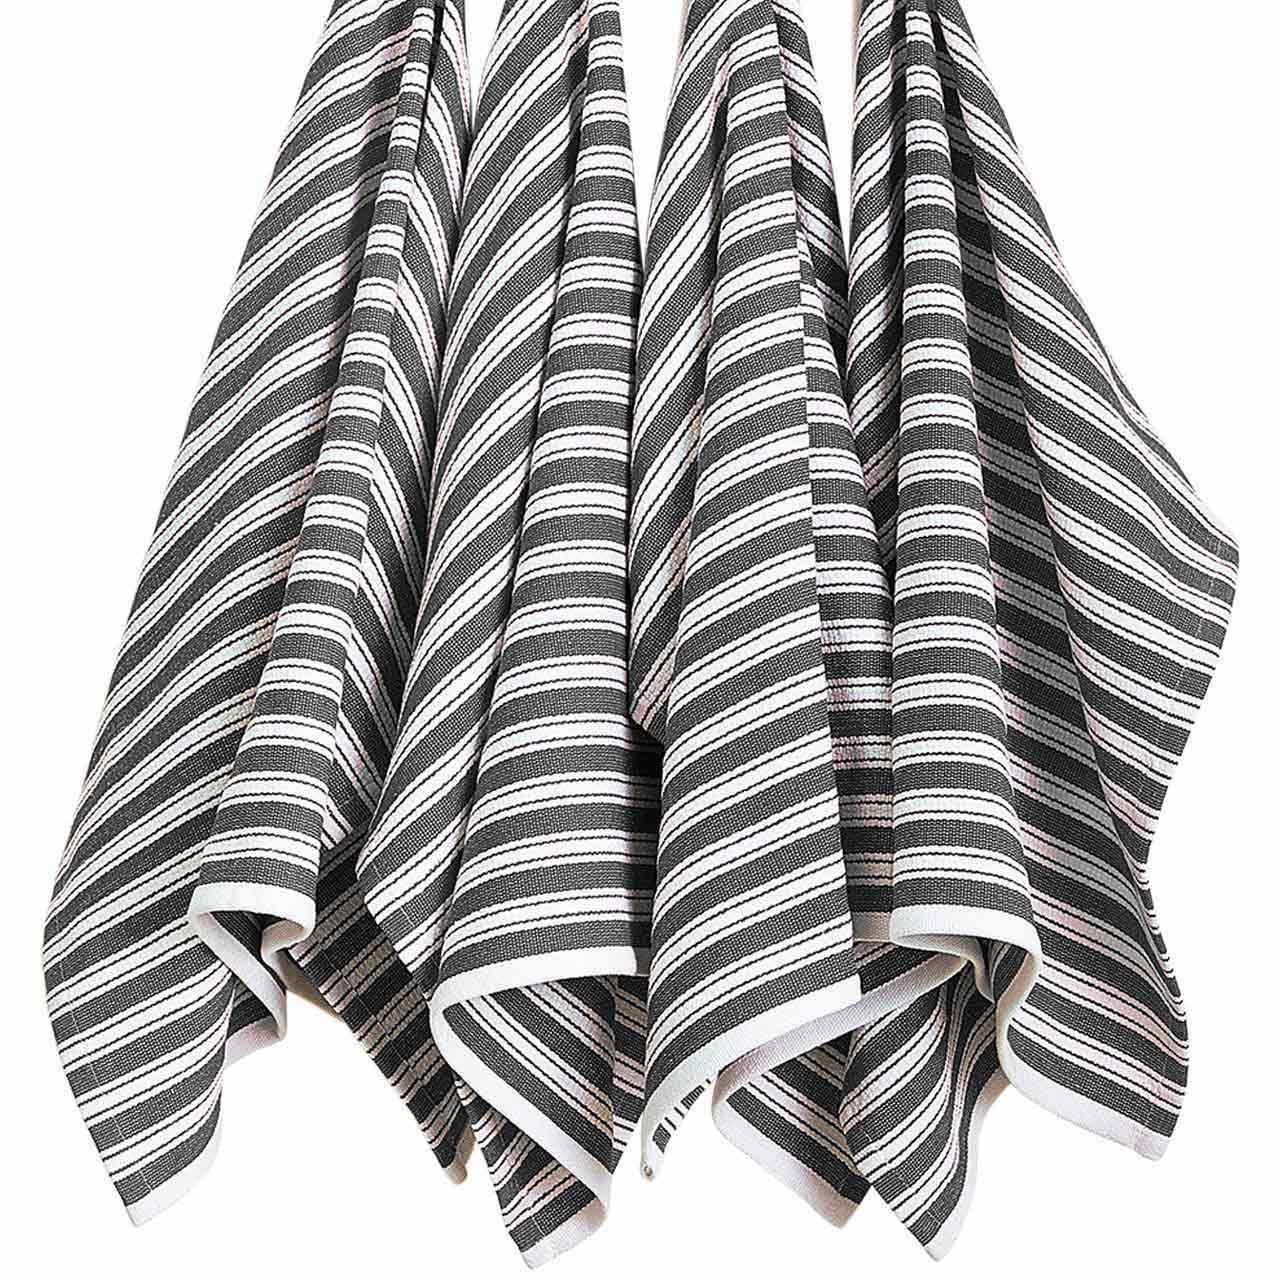 M&S Set of 4 Cotton Rich Basket Weave Tea Towels, One Size, Dark Grey